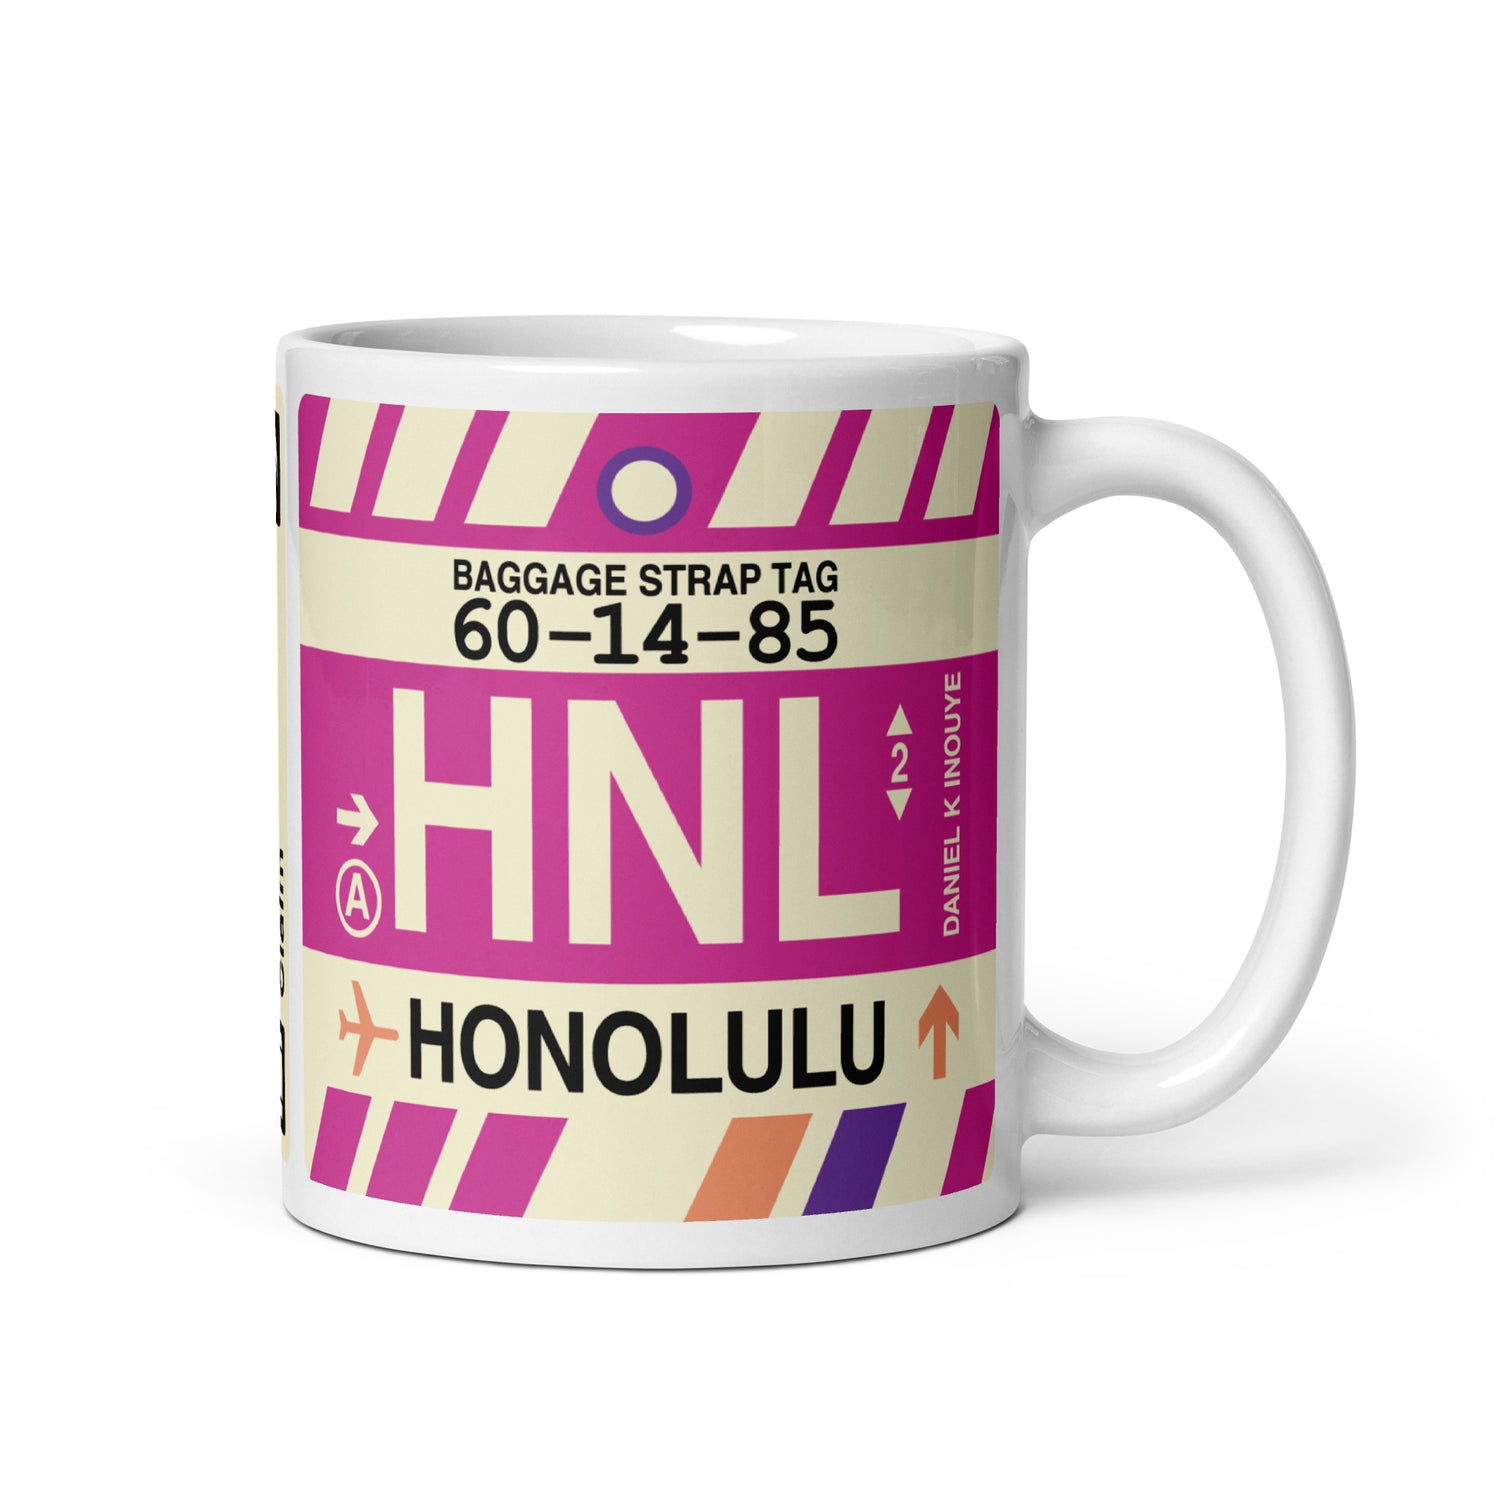 Honolulu Hawaii Coffee Mugs and Water Bottles • HNL Airport Code